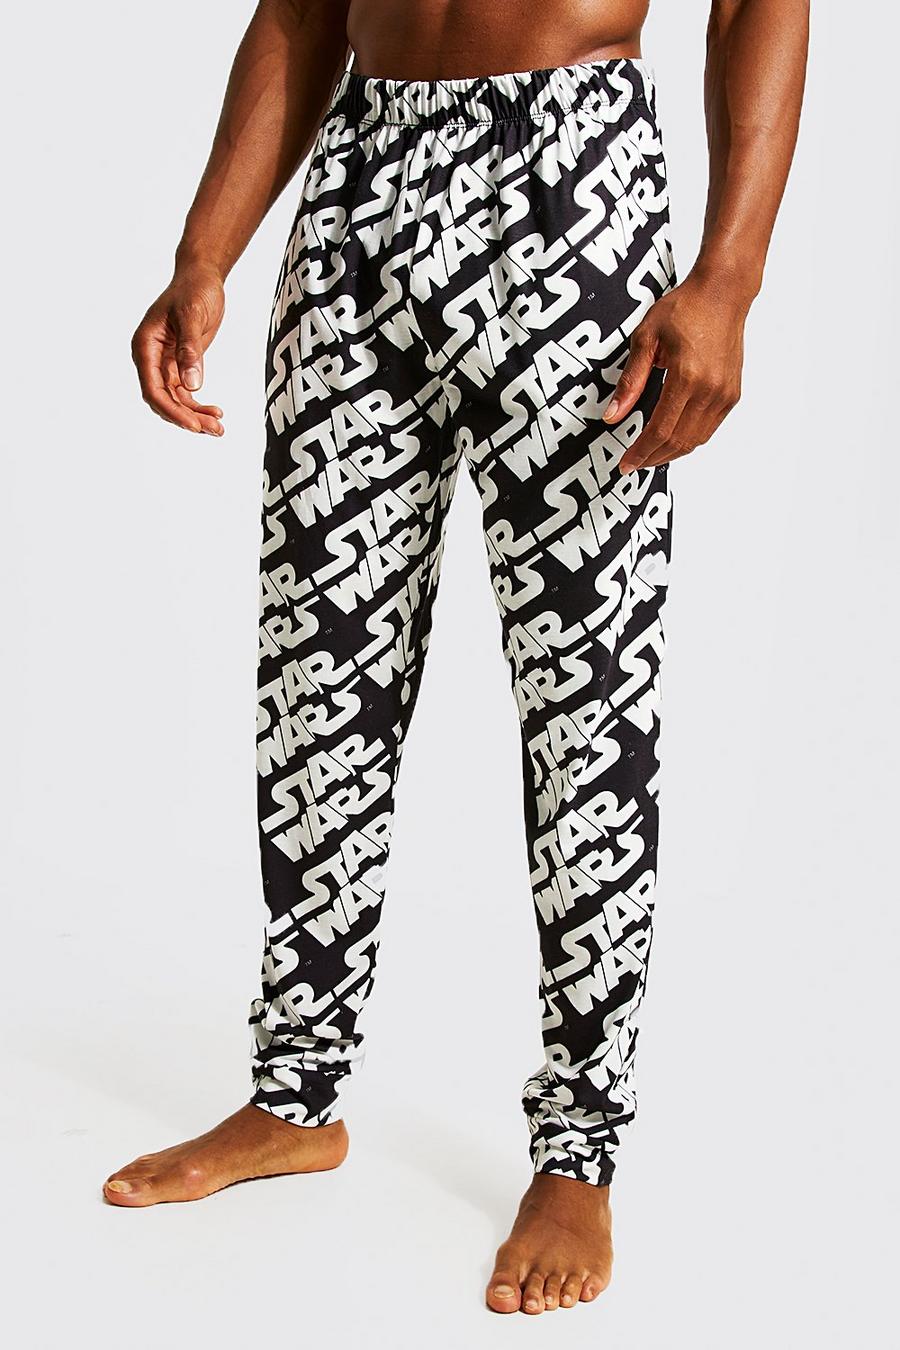 Pantalon loungwear Star Wars, Black image number 1